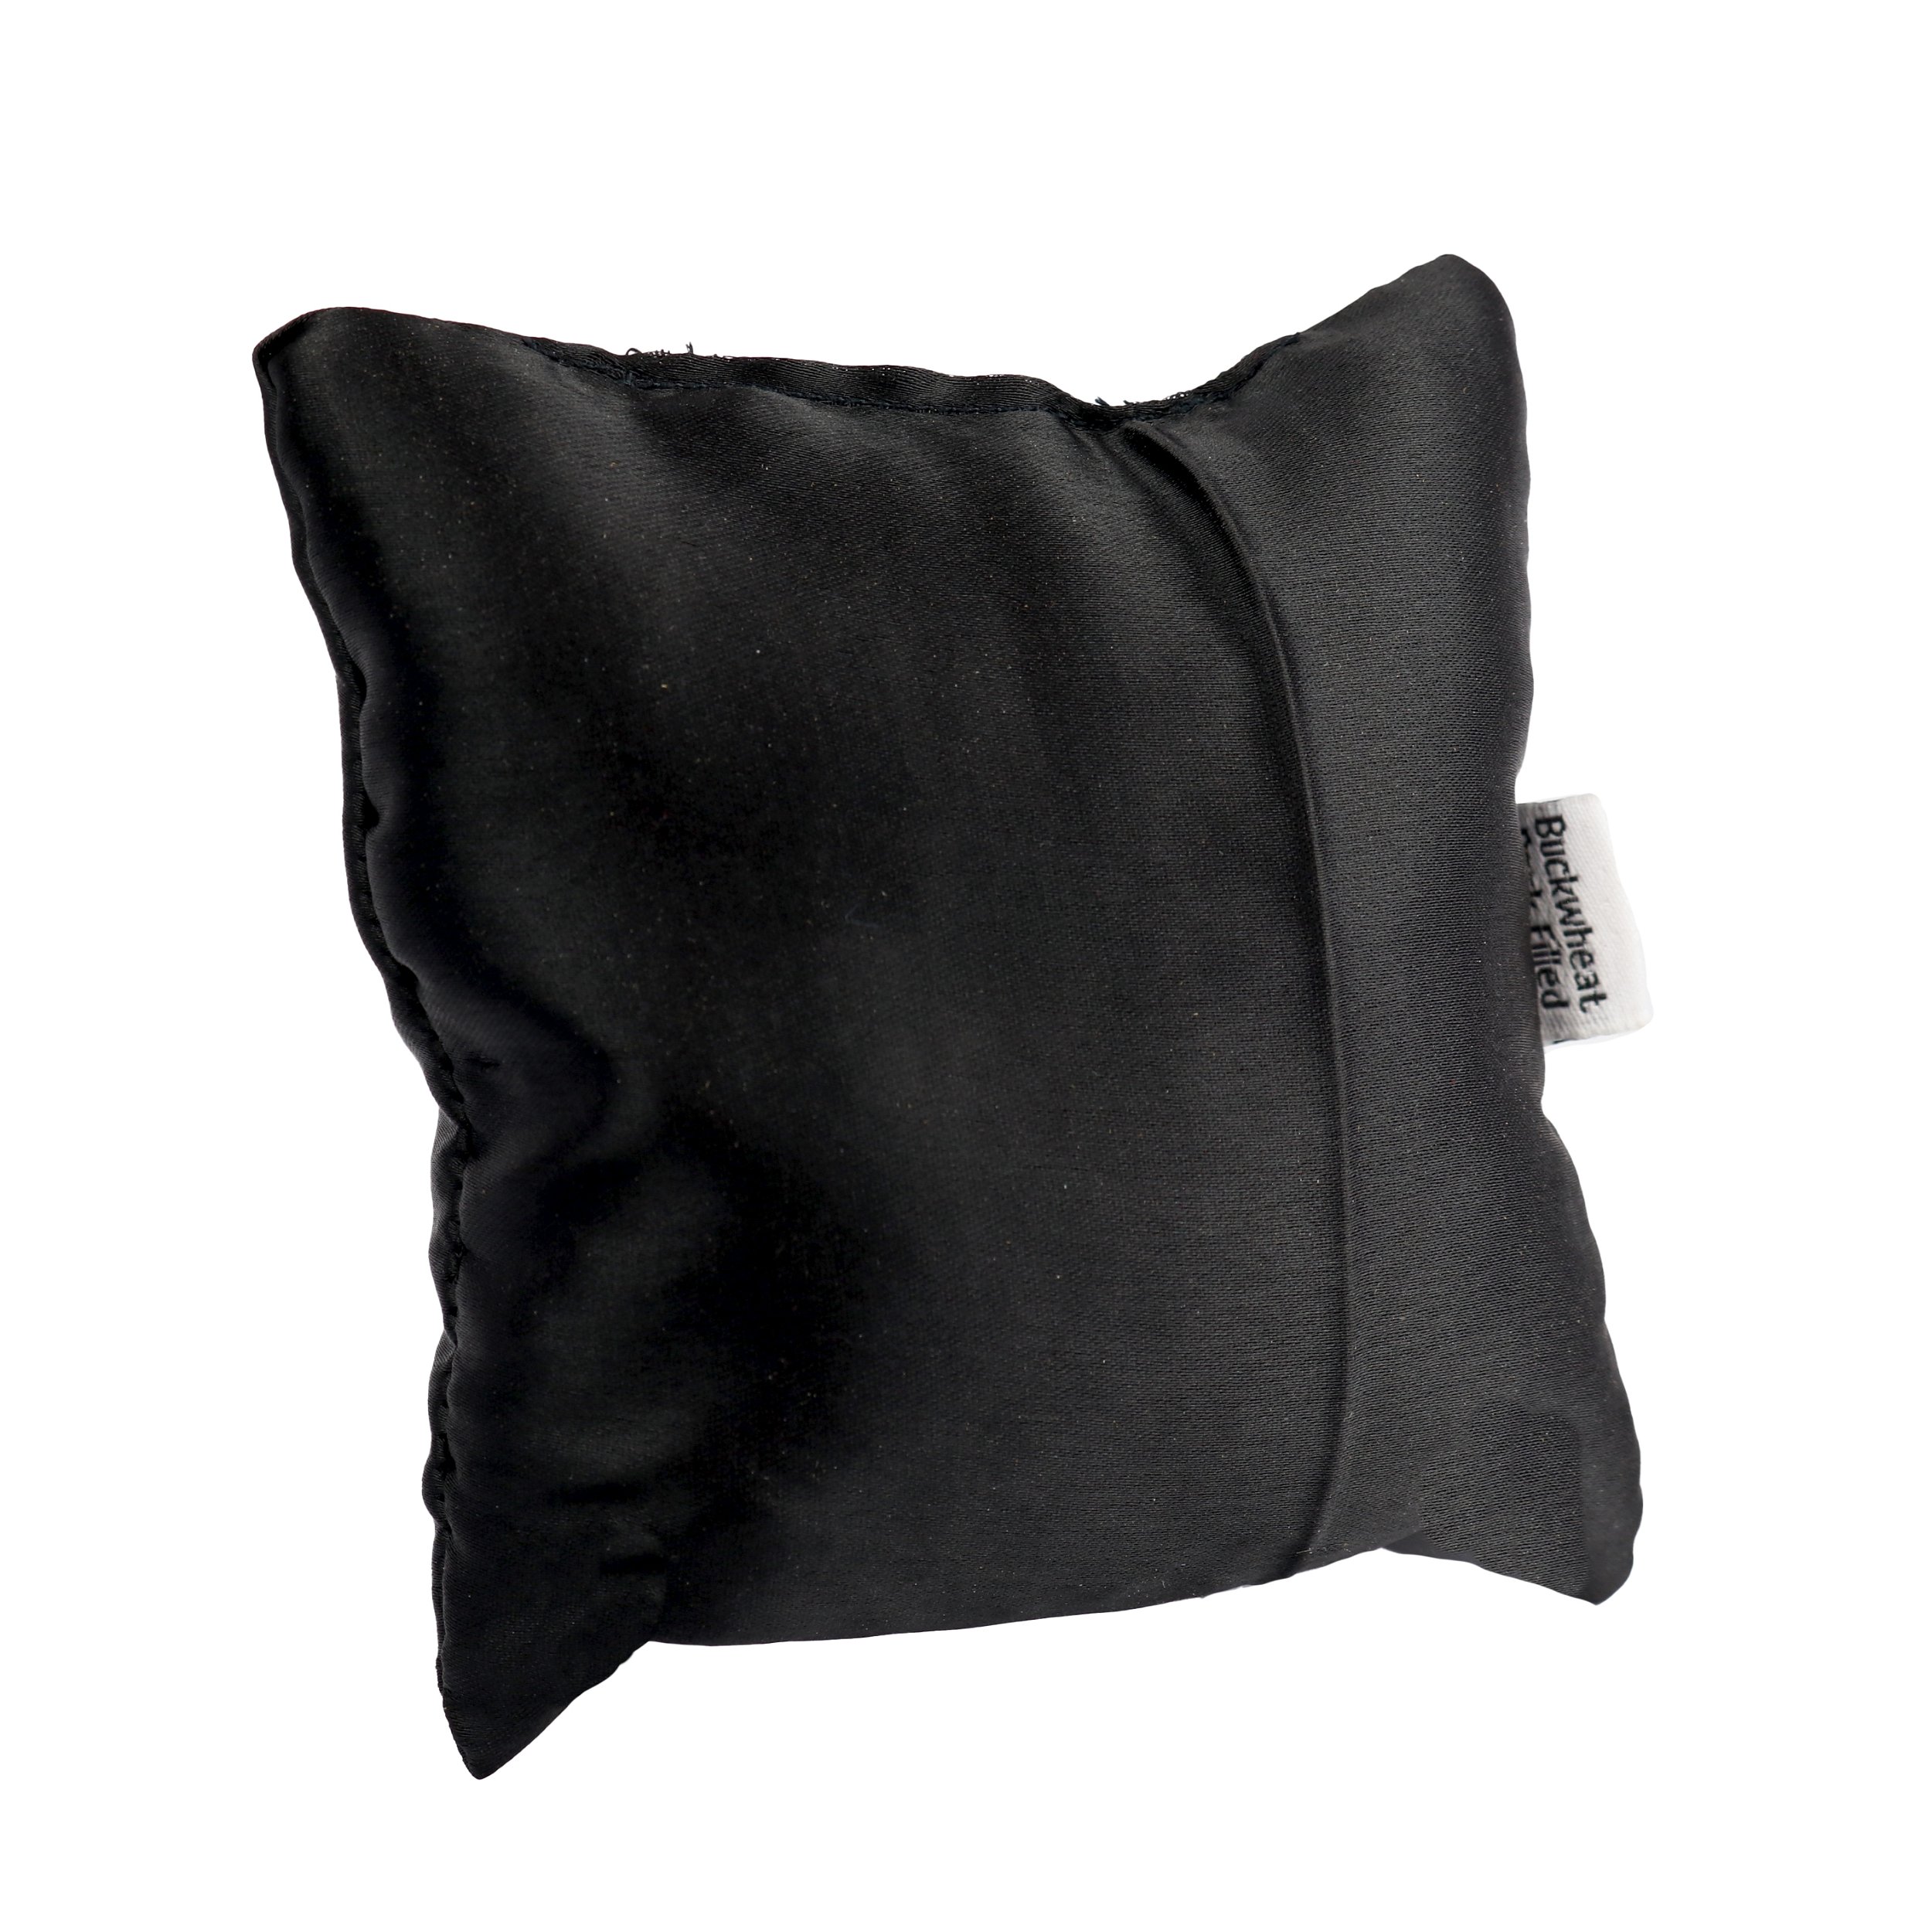 Black Satin Square Cushion 4x4